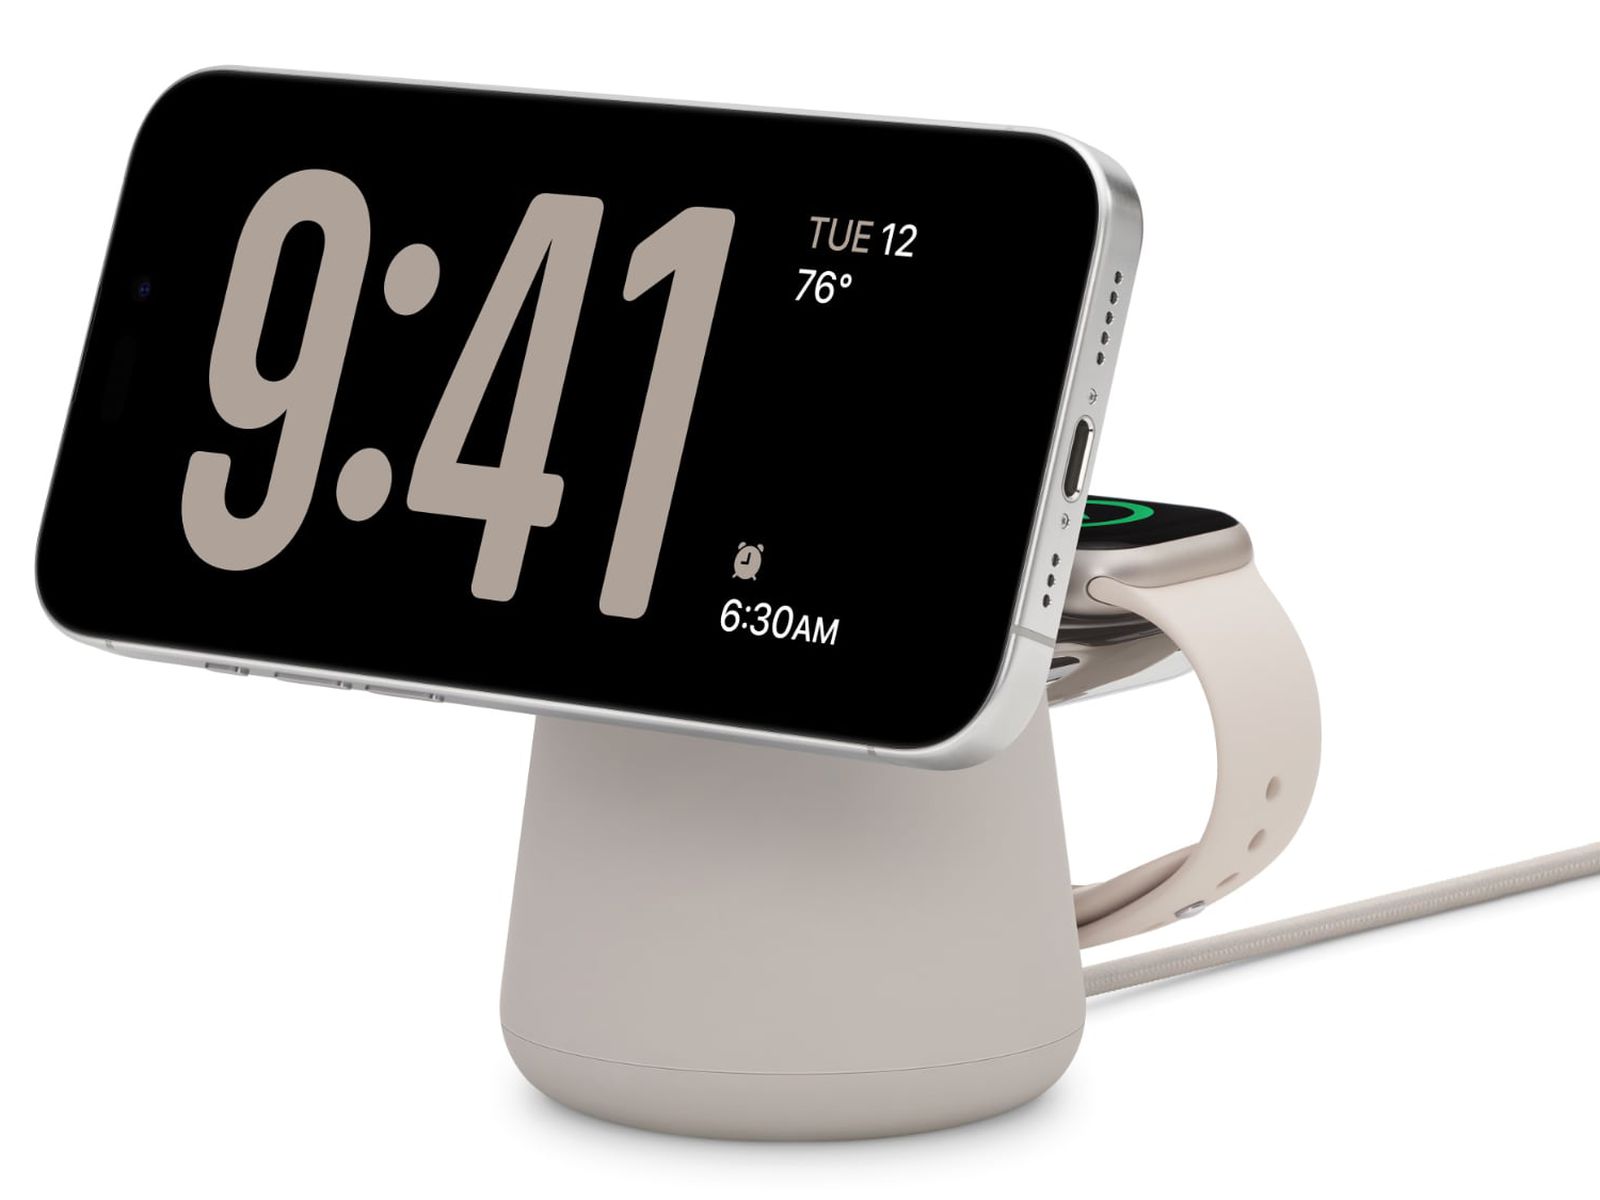 Belkin launches compact Apple Watch power bank, extends battery